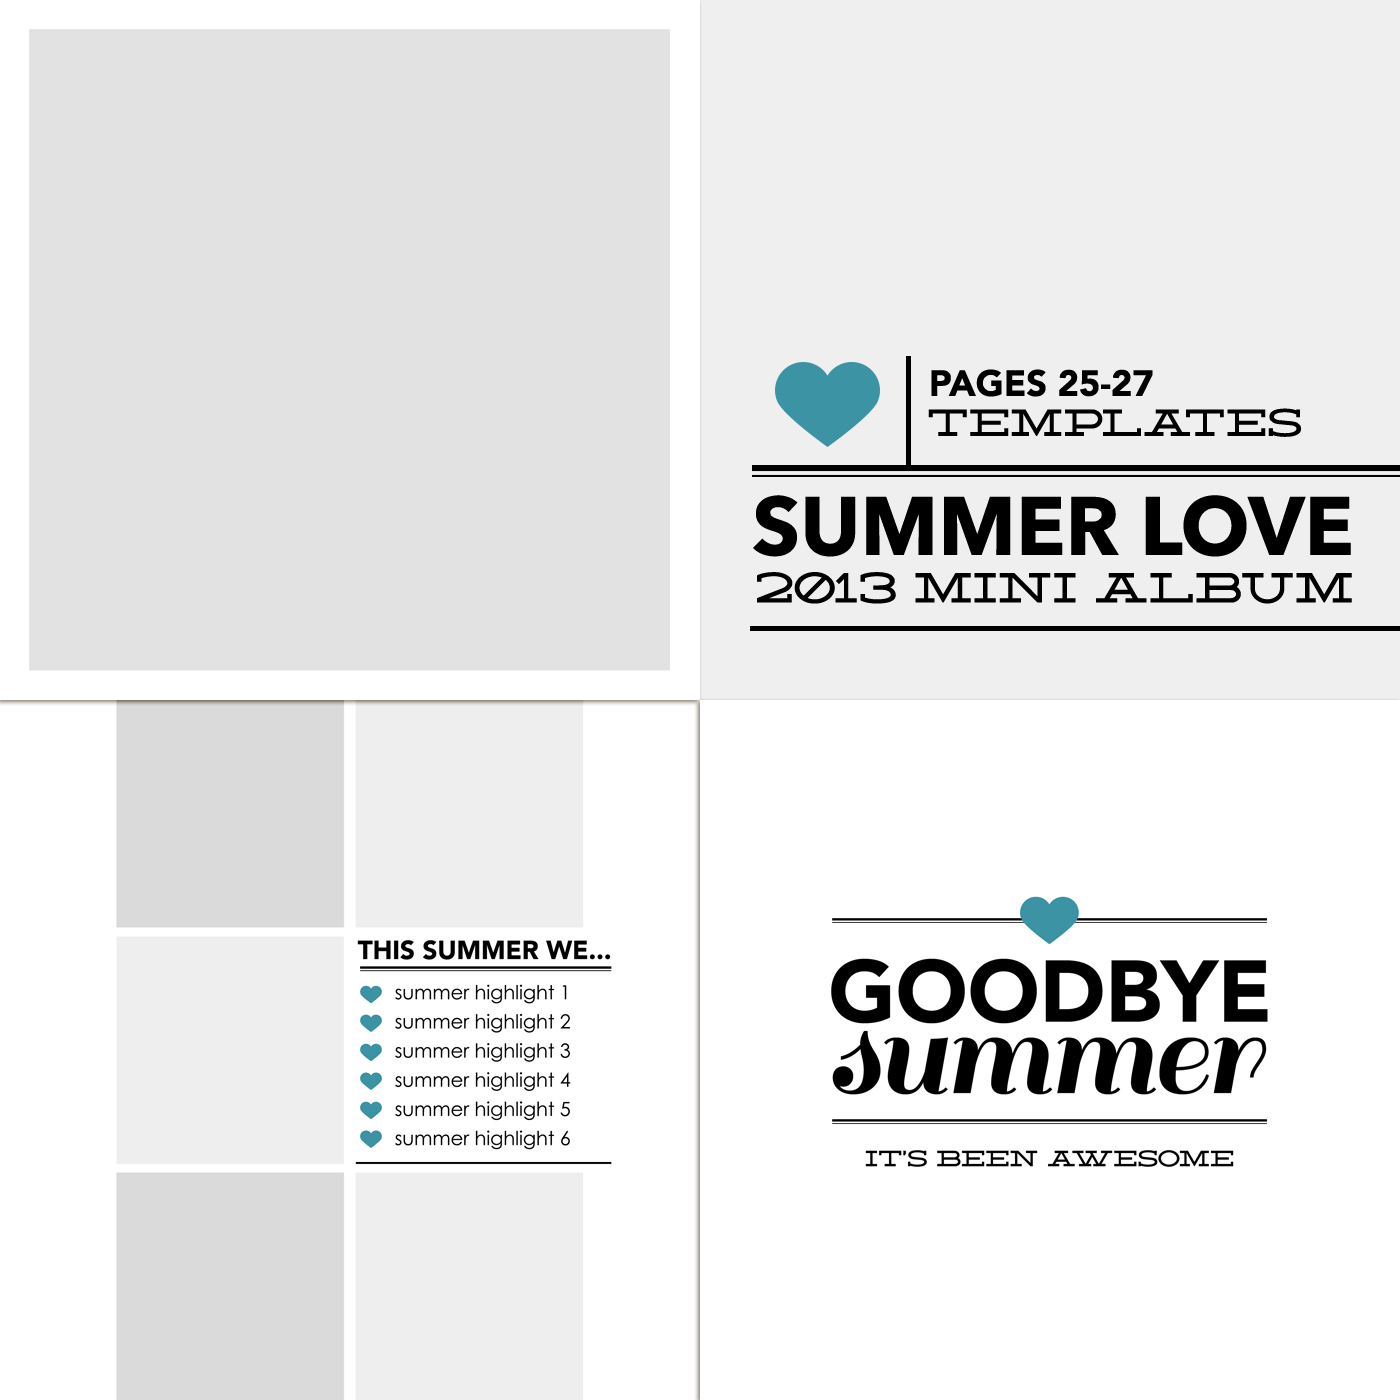 nettiodesigns_SummerLove-pg25-27-templates